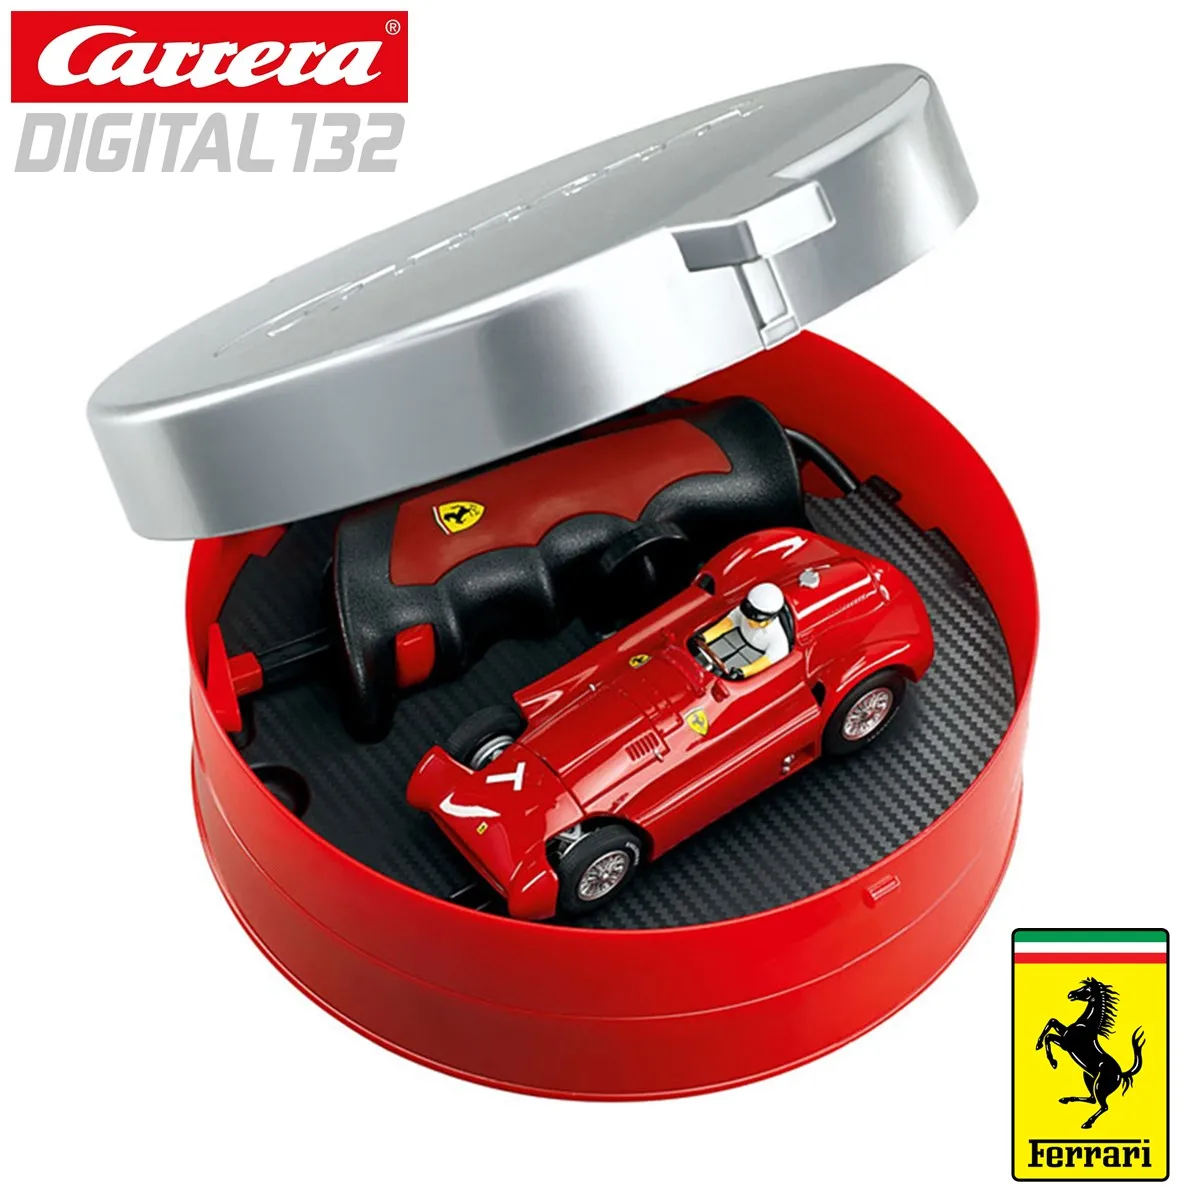 Carrera Digital132 | Carrera Slot Car | Ferrari Carrera | Ferrari D50 - Carrera  Car - Aliexpress